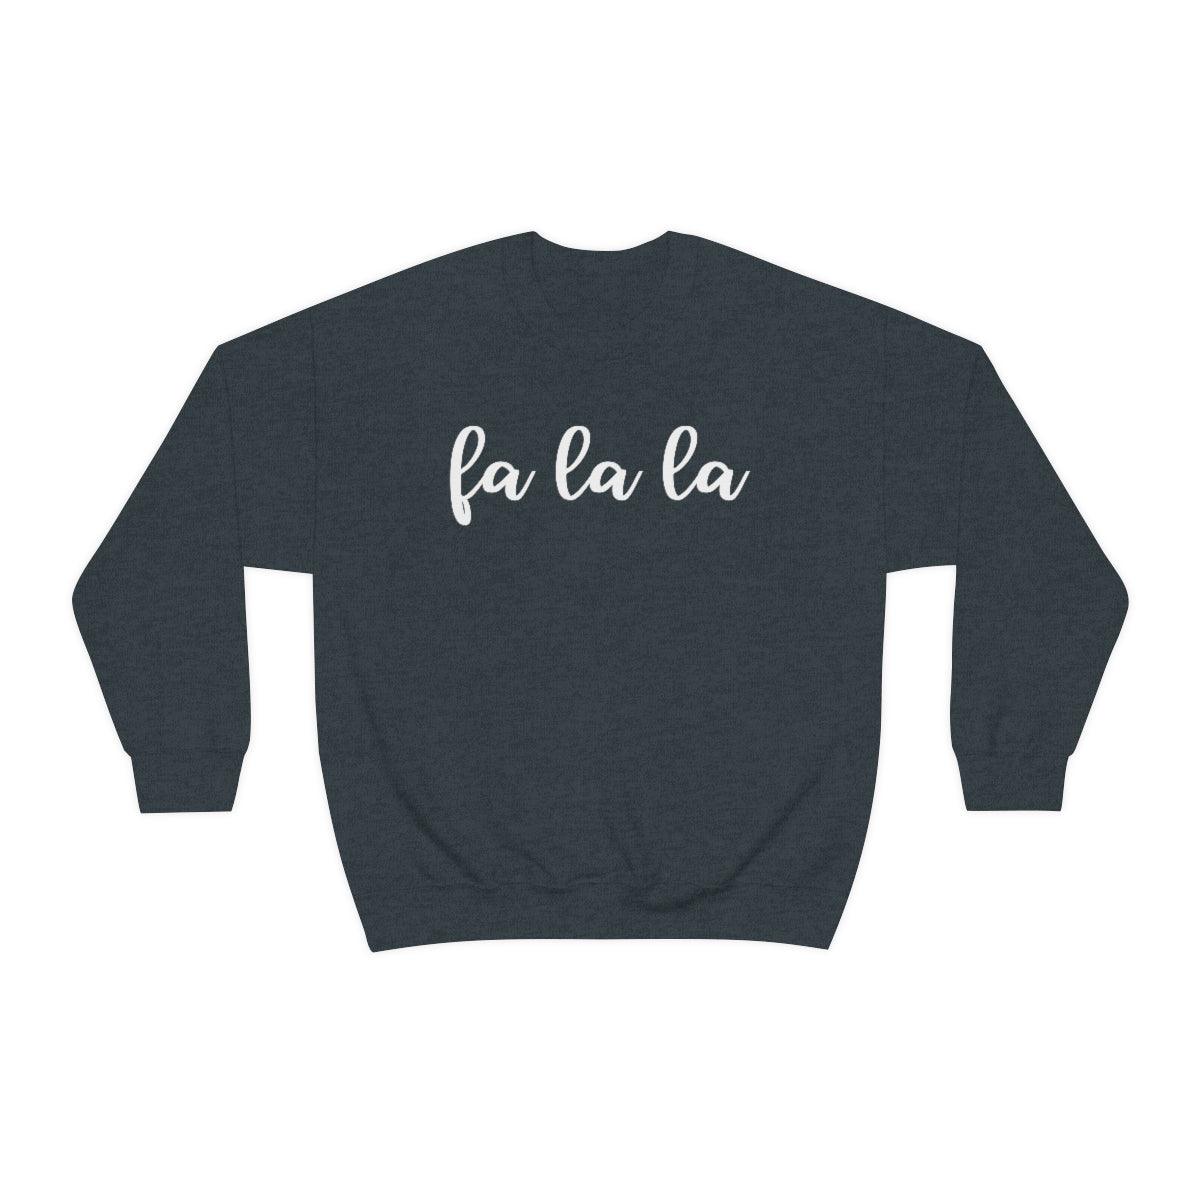 Fa La La Christmas Crewneck Sweater - Crystal Rose Design Co.